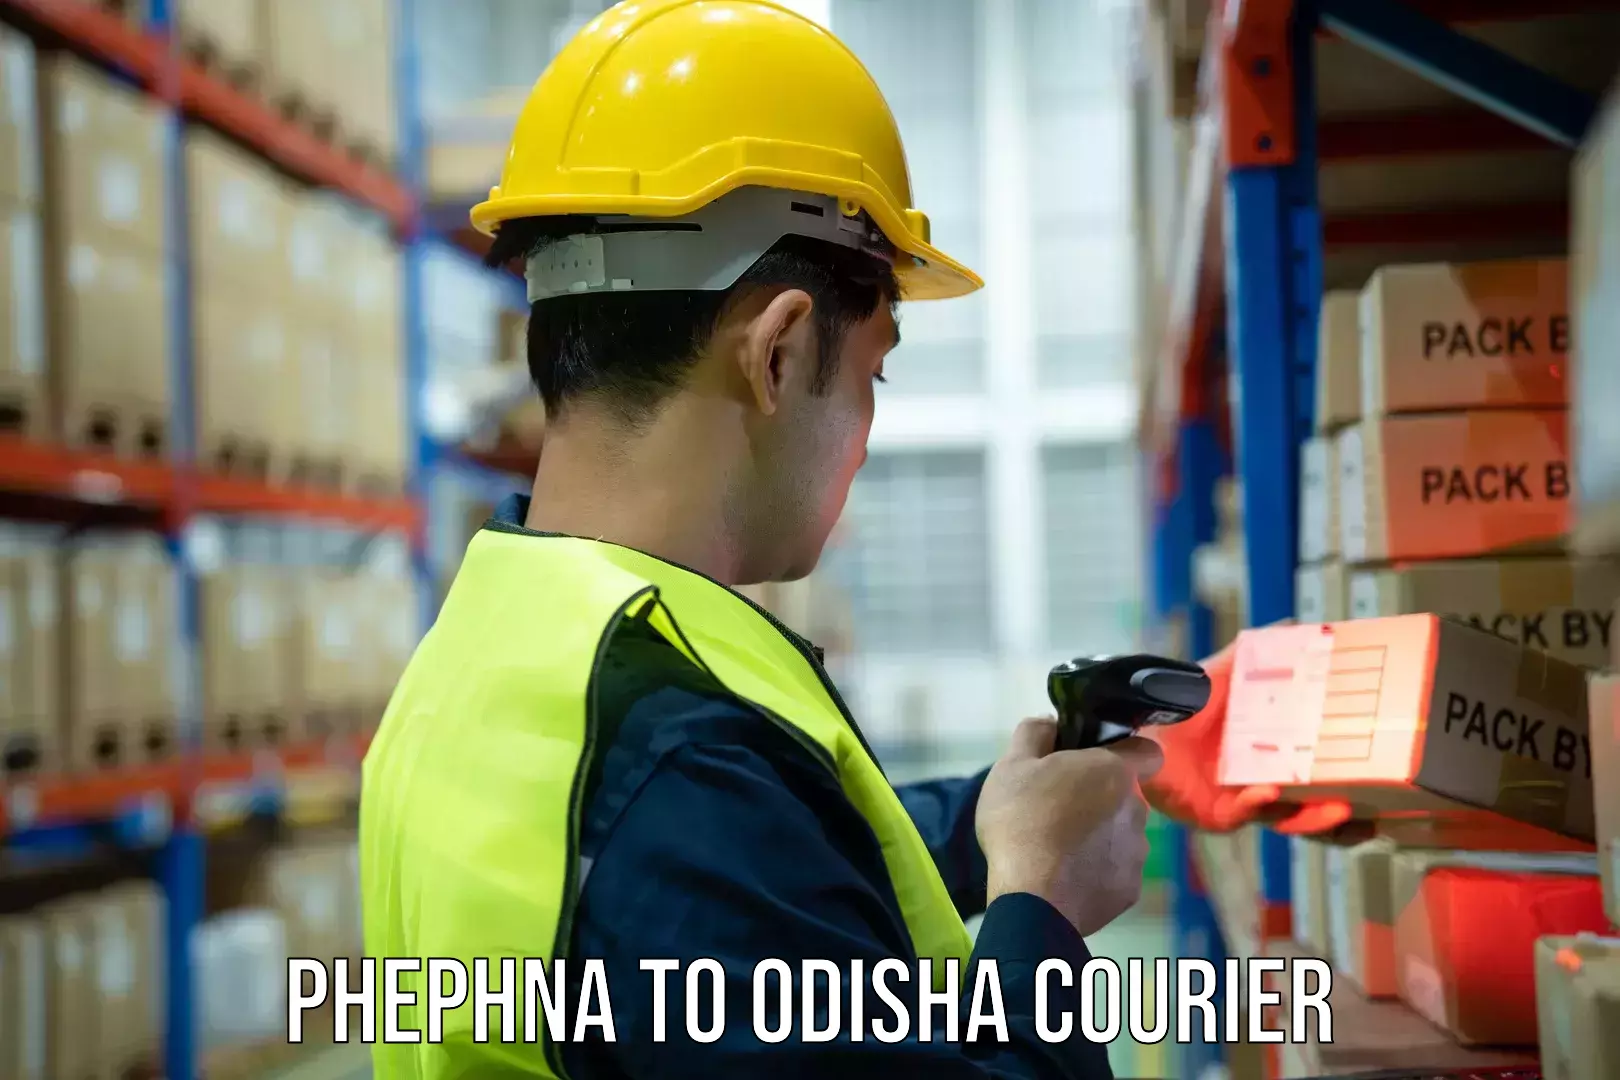 Professional courier handling Phephna to Odisha